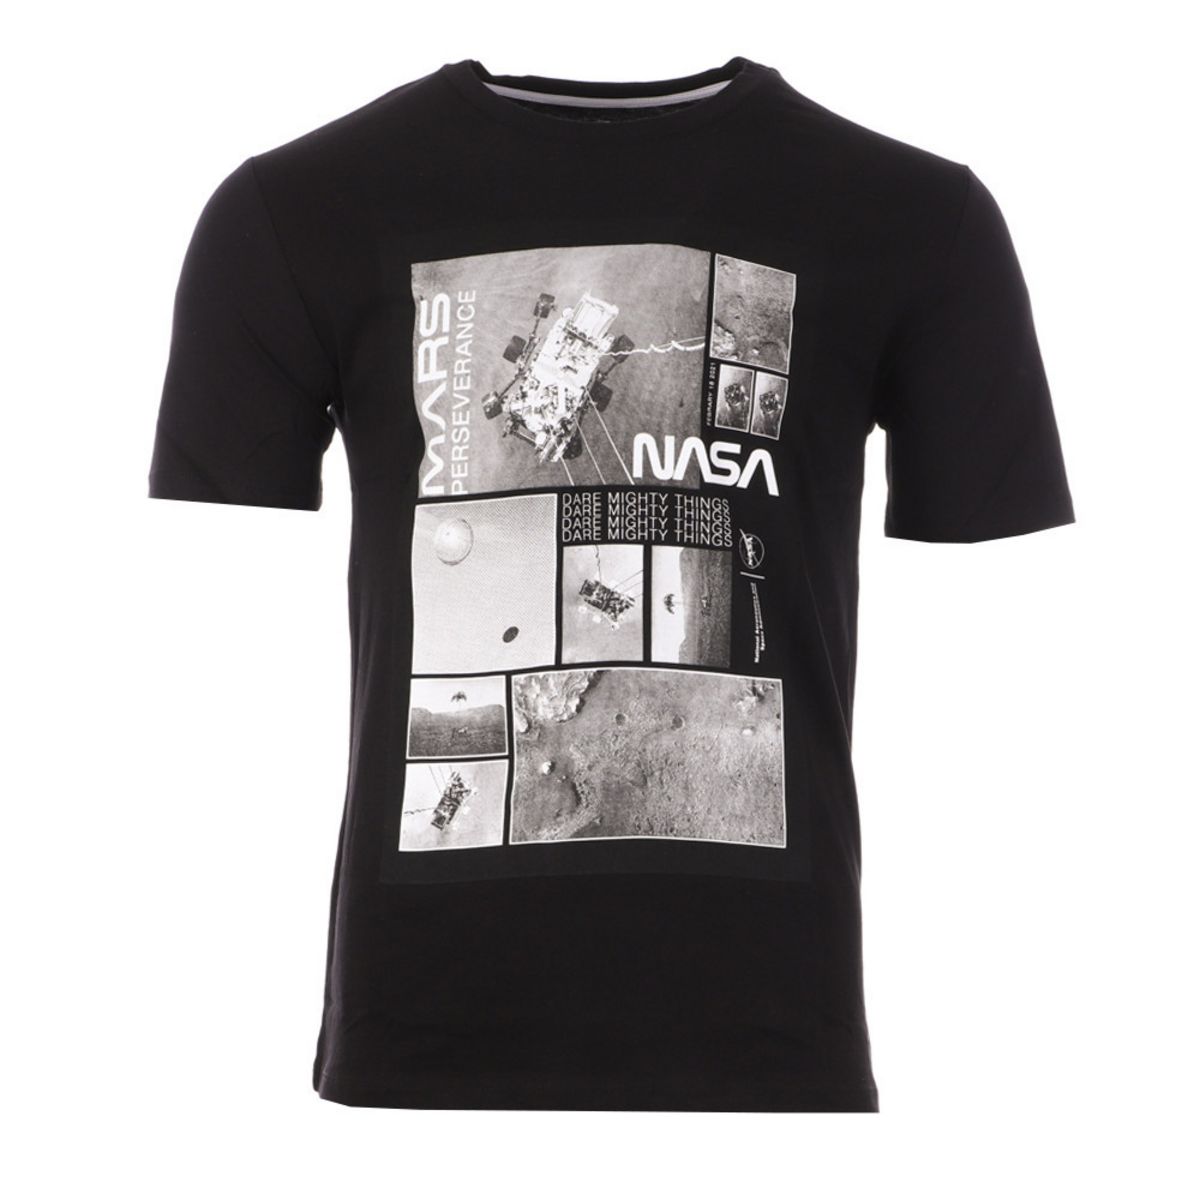 NASA T-shirt Noir Homme Nasa MARS04T